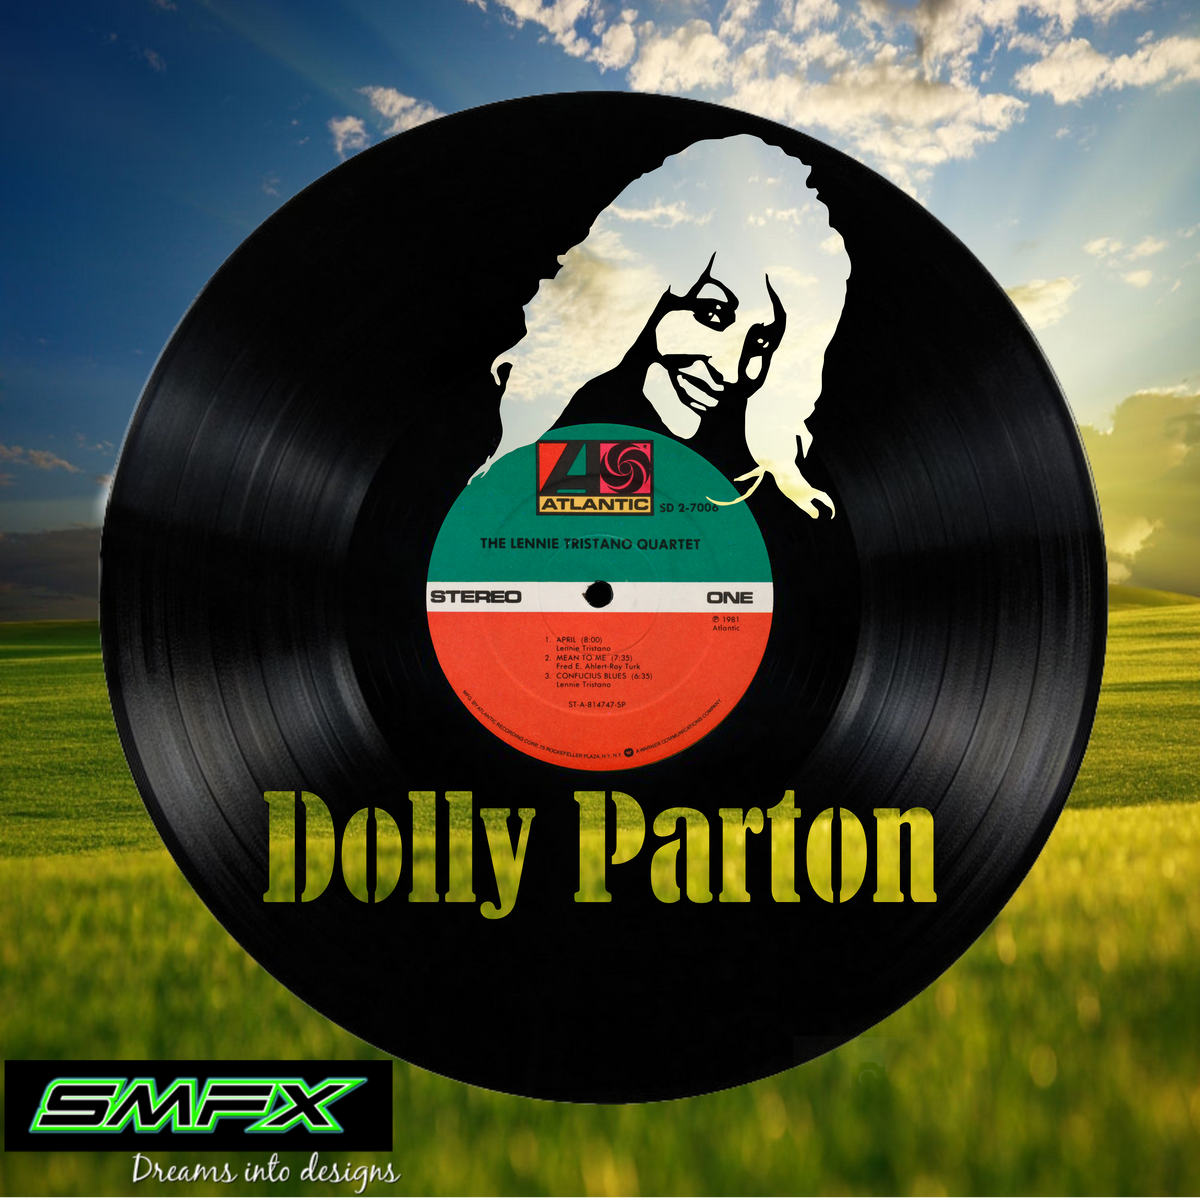 dolly parton Laser Cut Vinyl Record artist representation or vinyl clo — SMFX  Designs